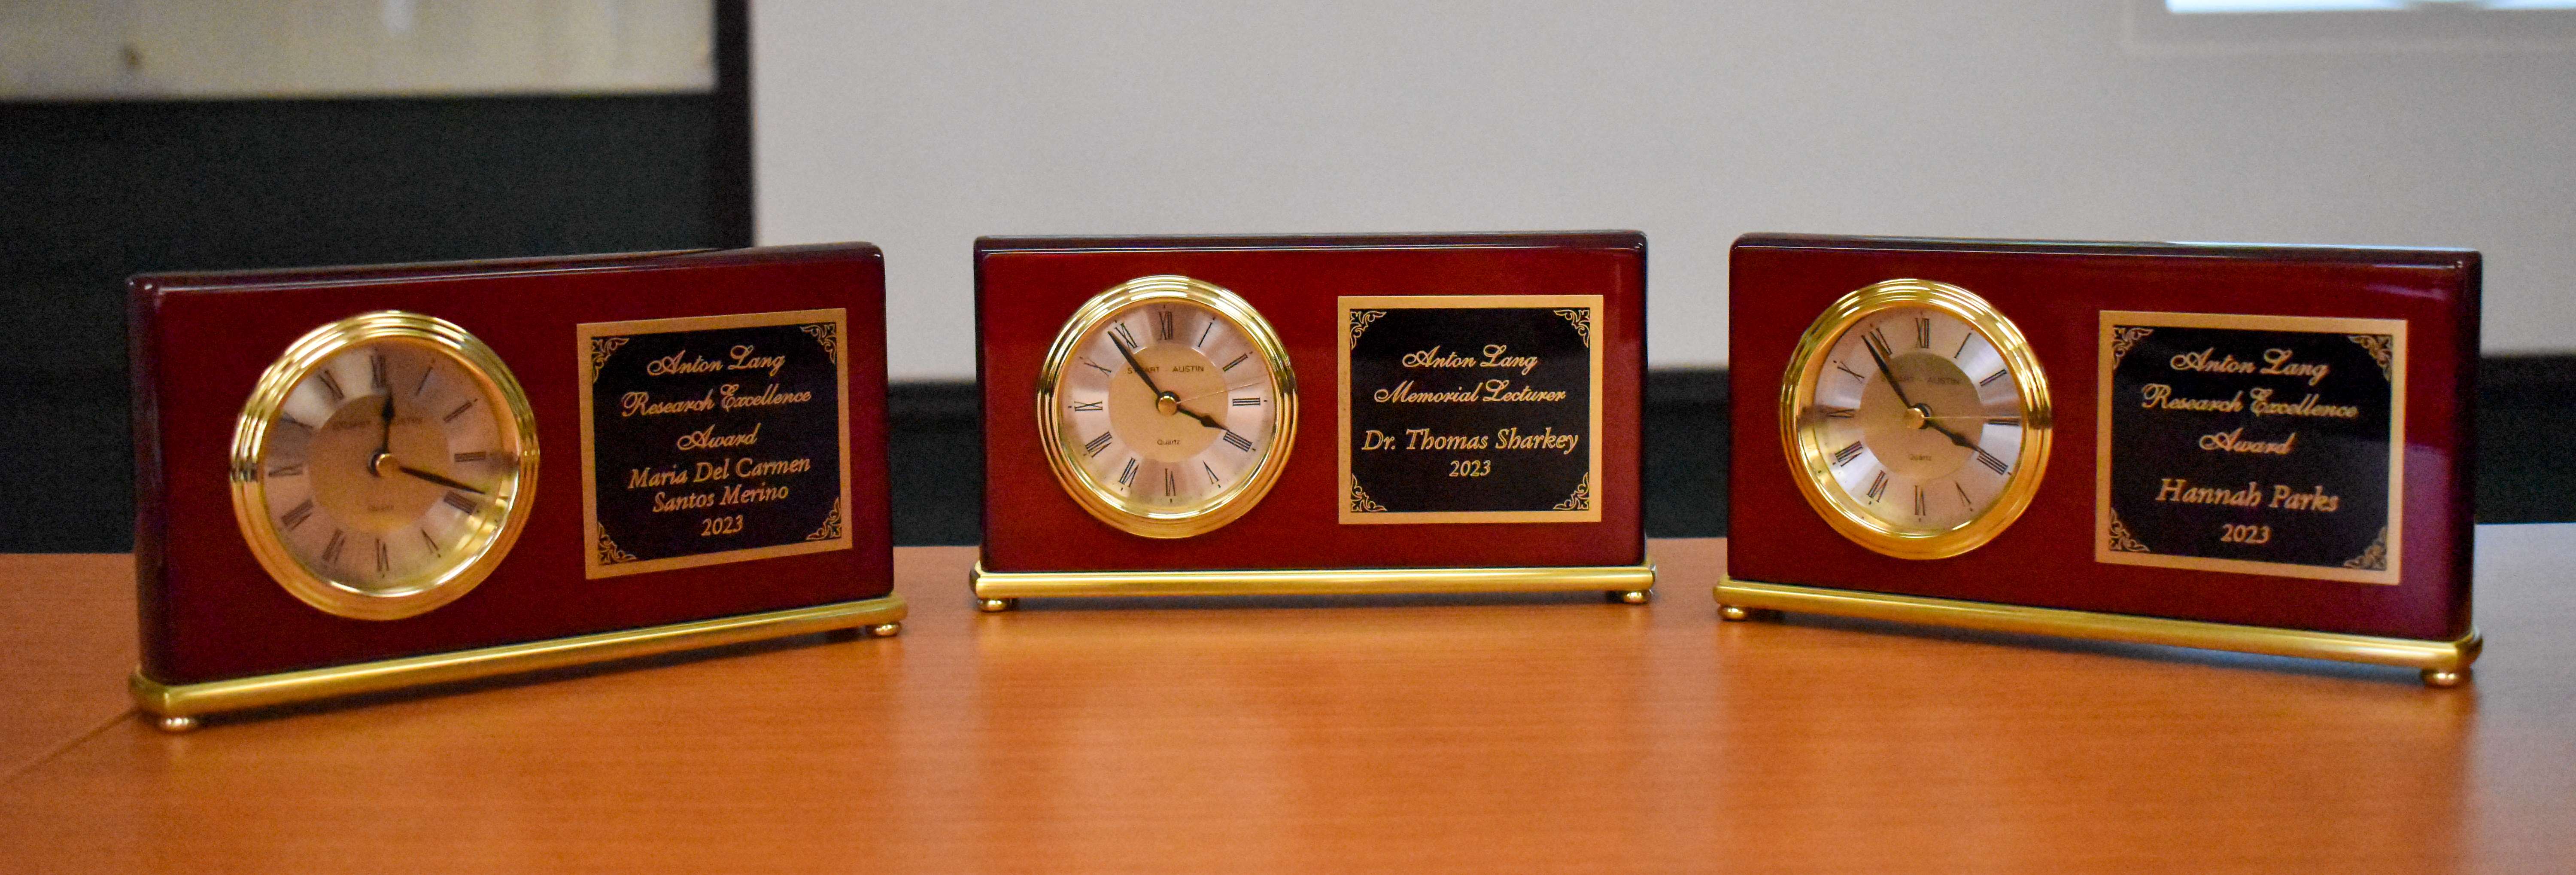 Three award clocks with plaques 